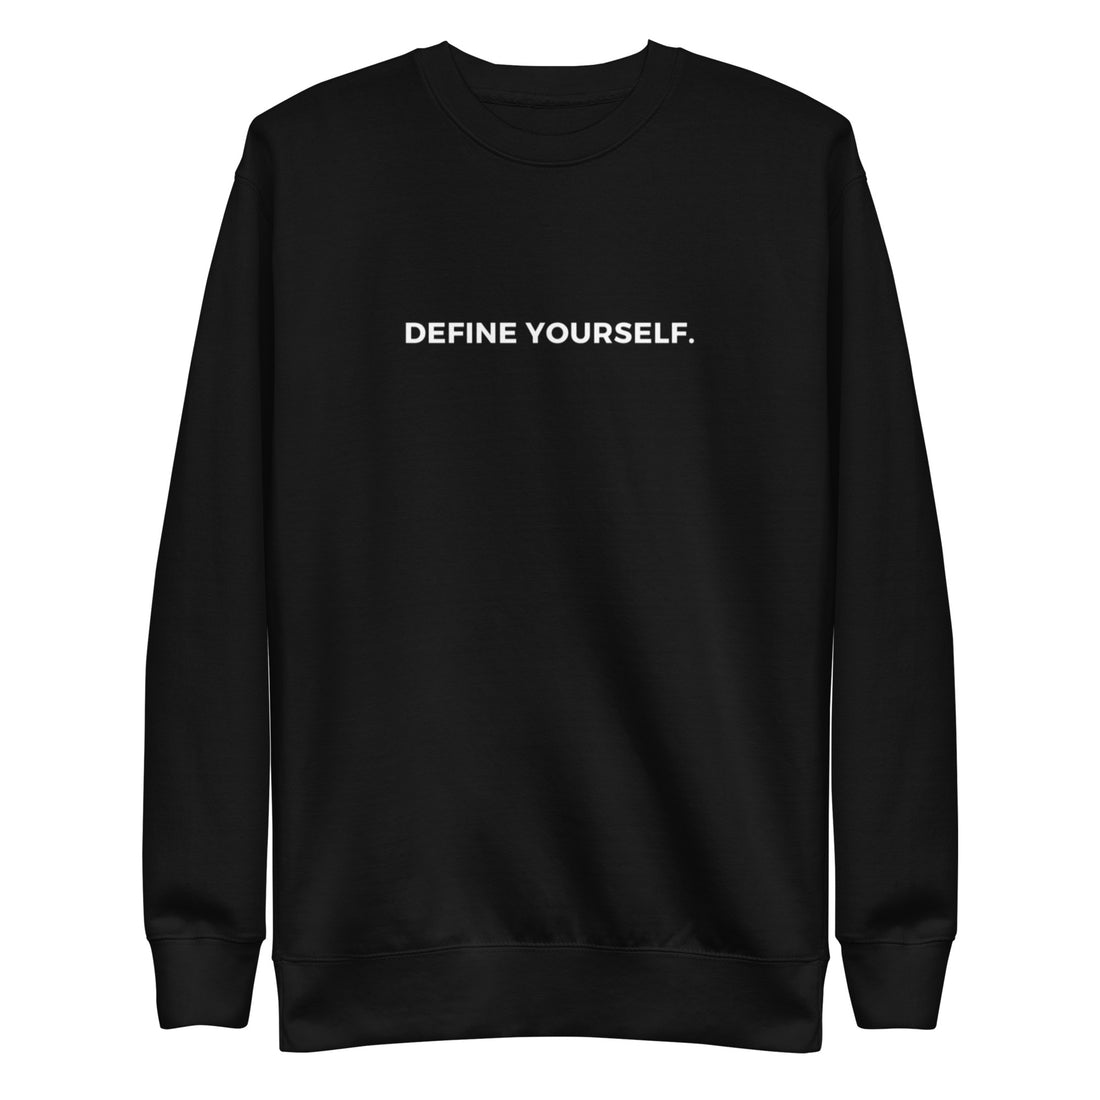 'DEFINE YOURSELF.' SWEATSHIRT BLACK